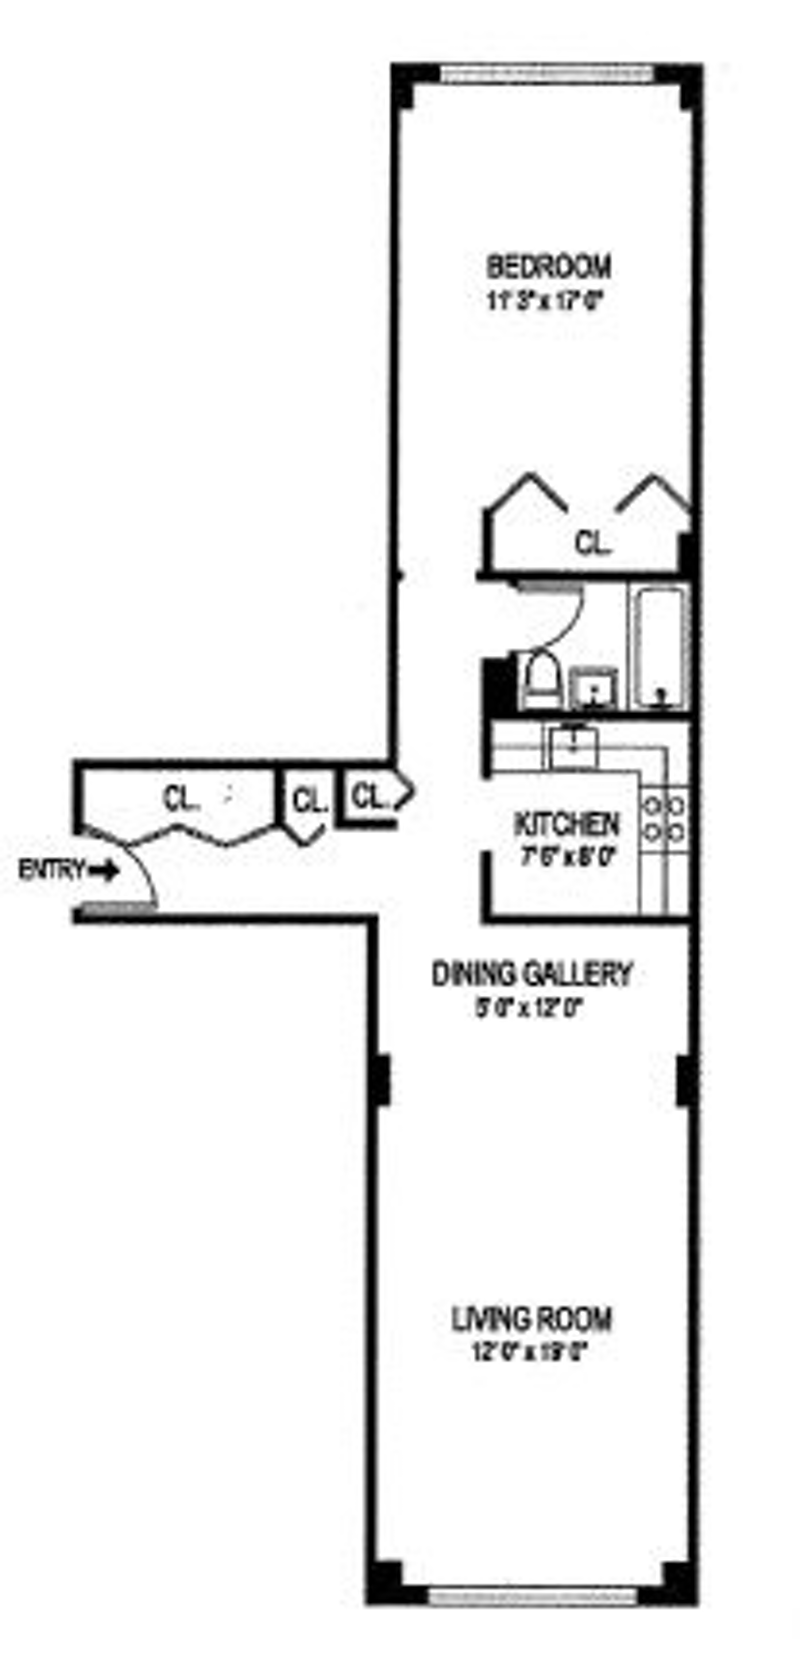 Floorplan for 222 East 19th Street, 8H